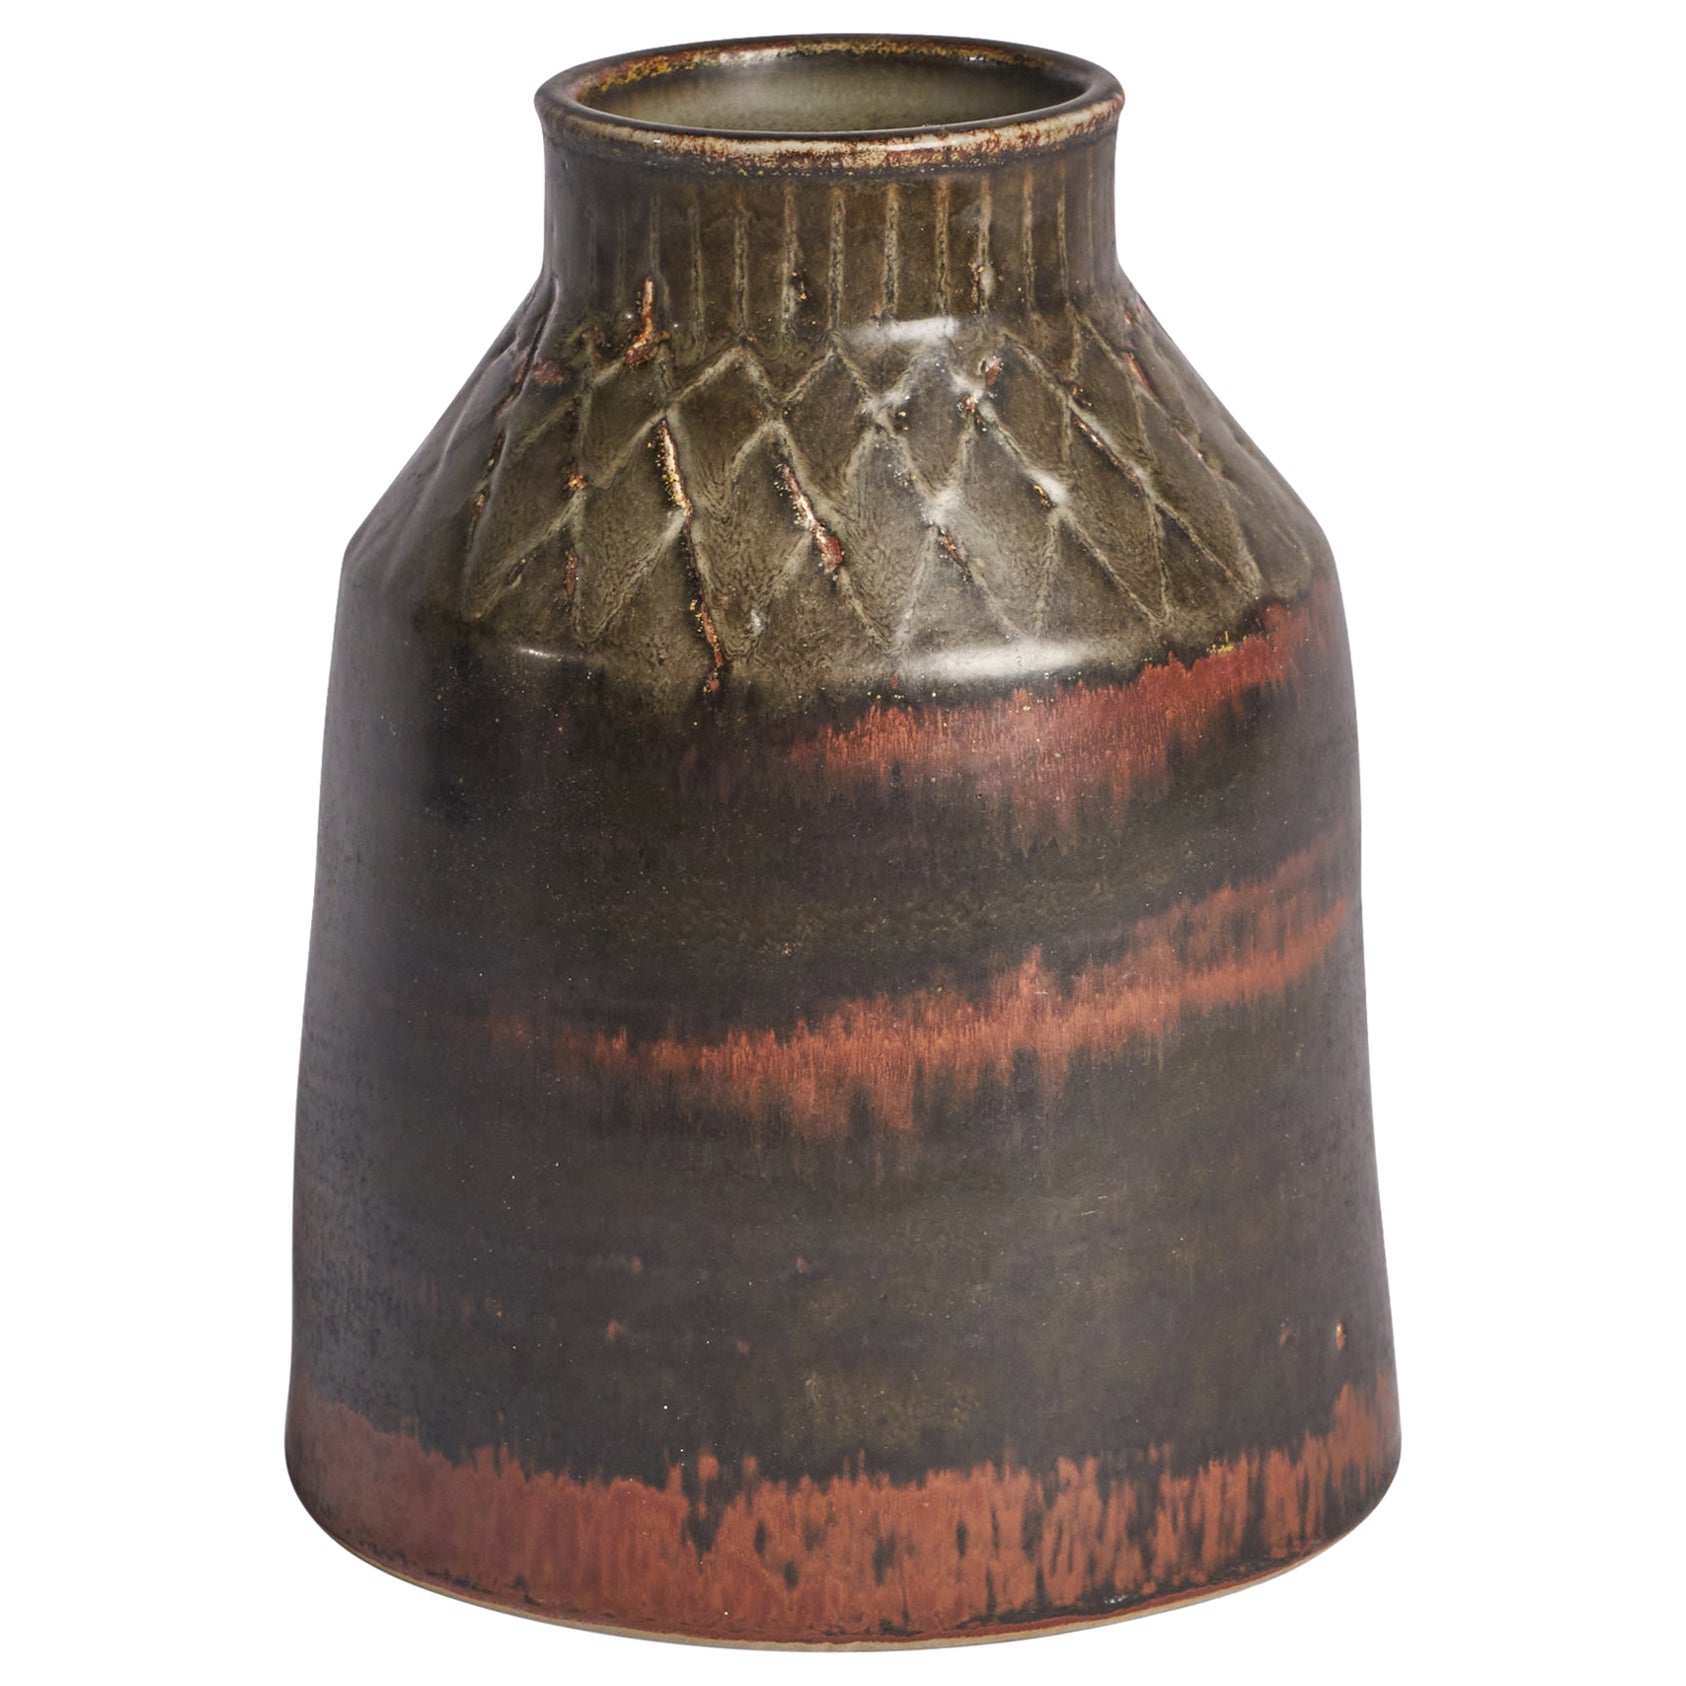 Carl-Harry Stålhane, Vase, Stoneware, Sweden, 1950s